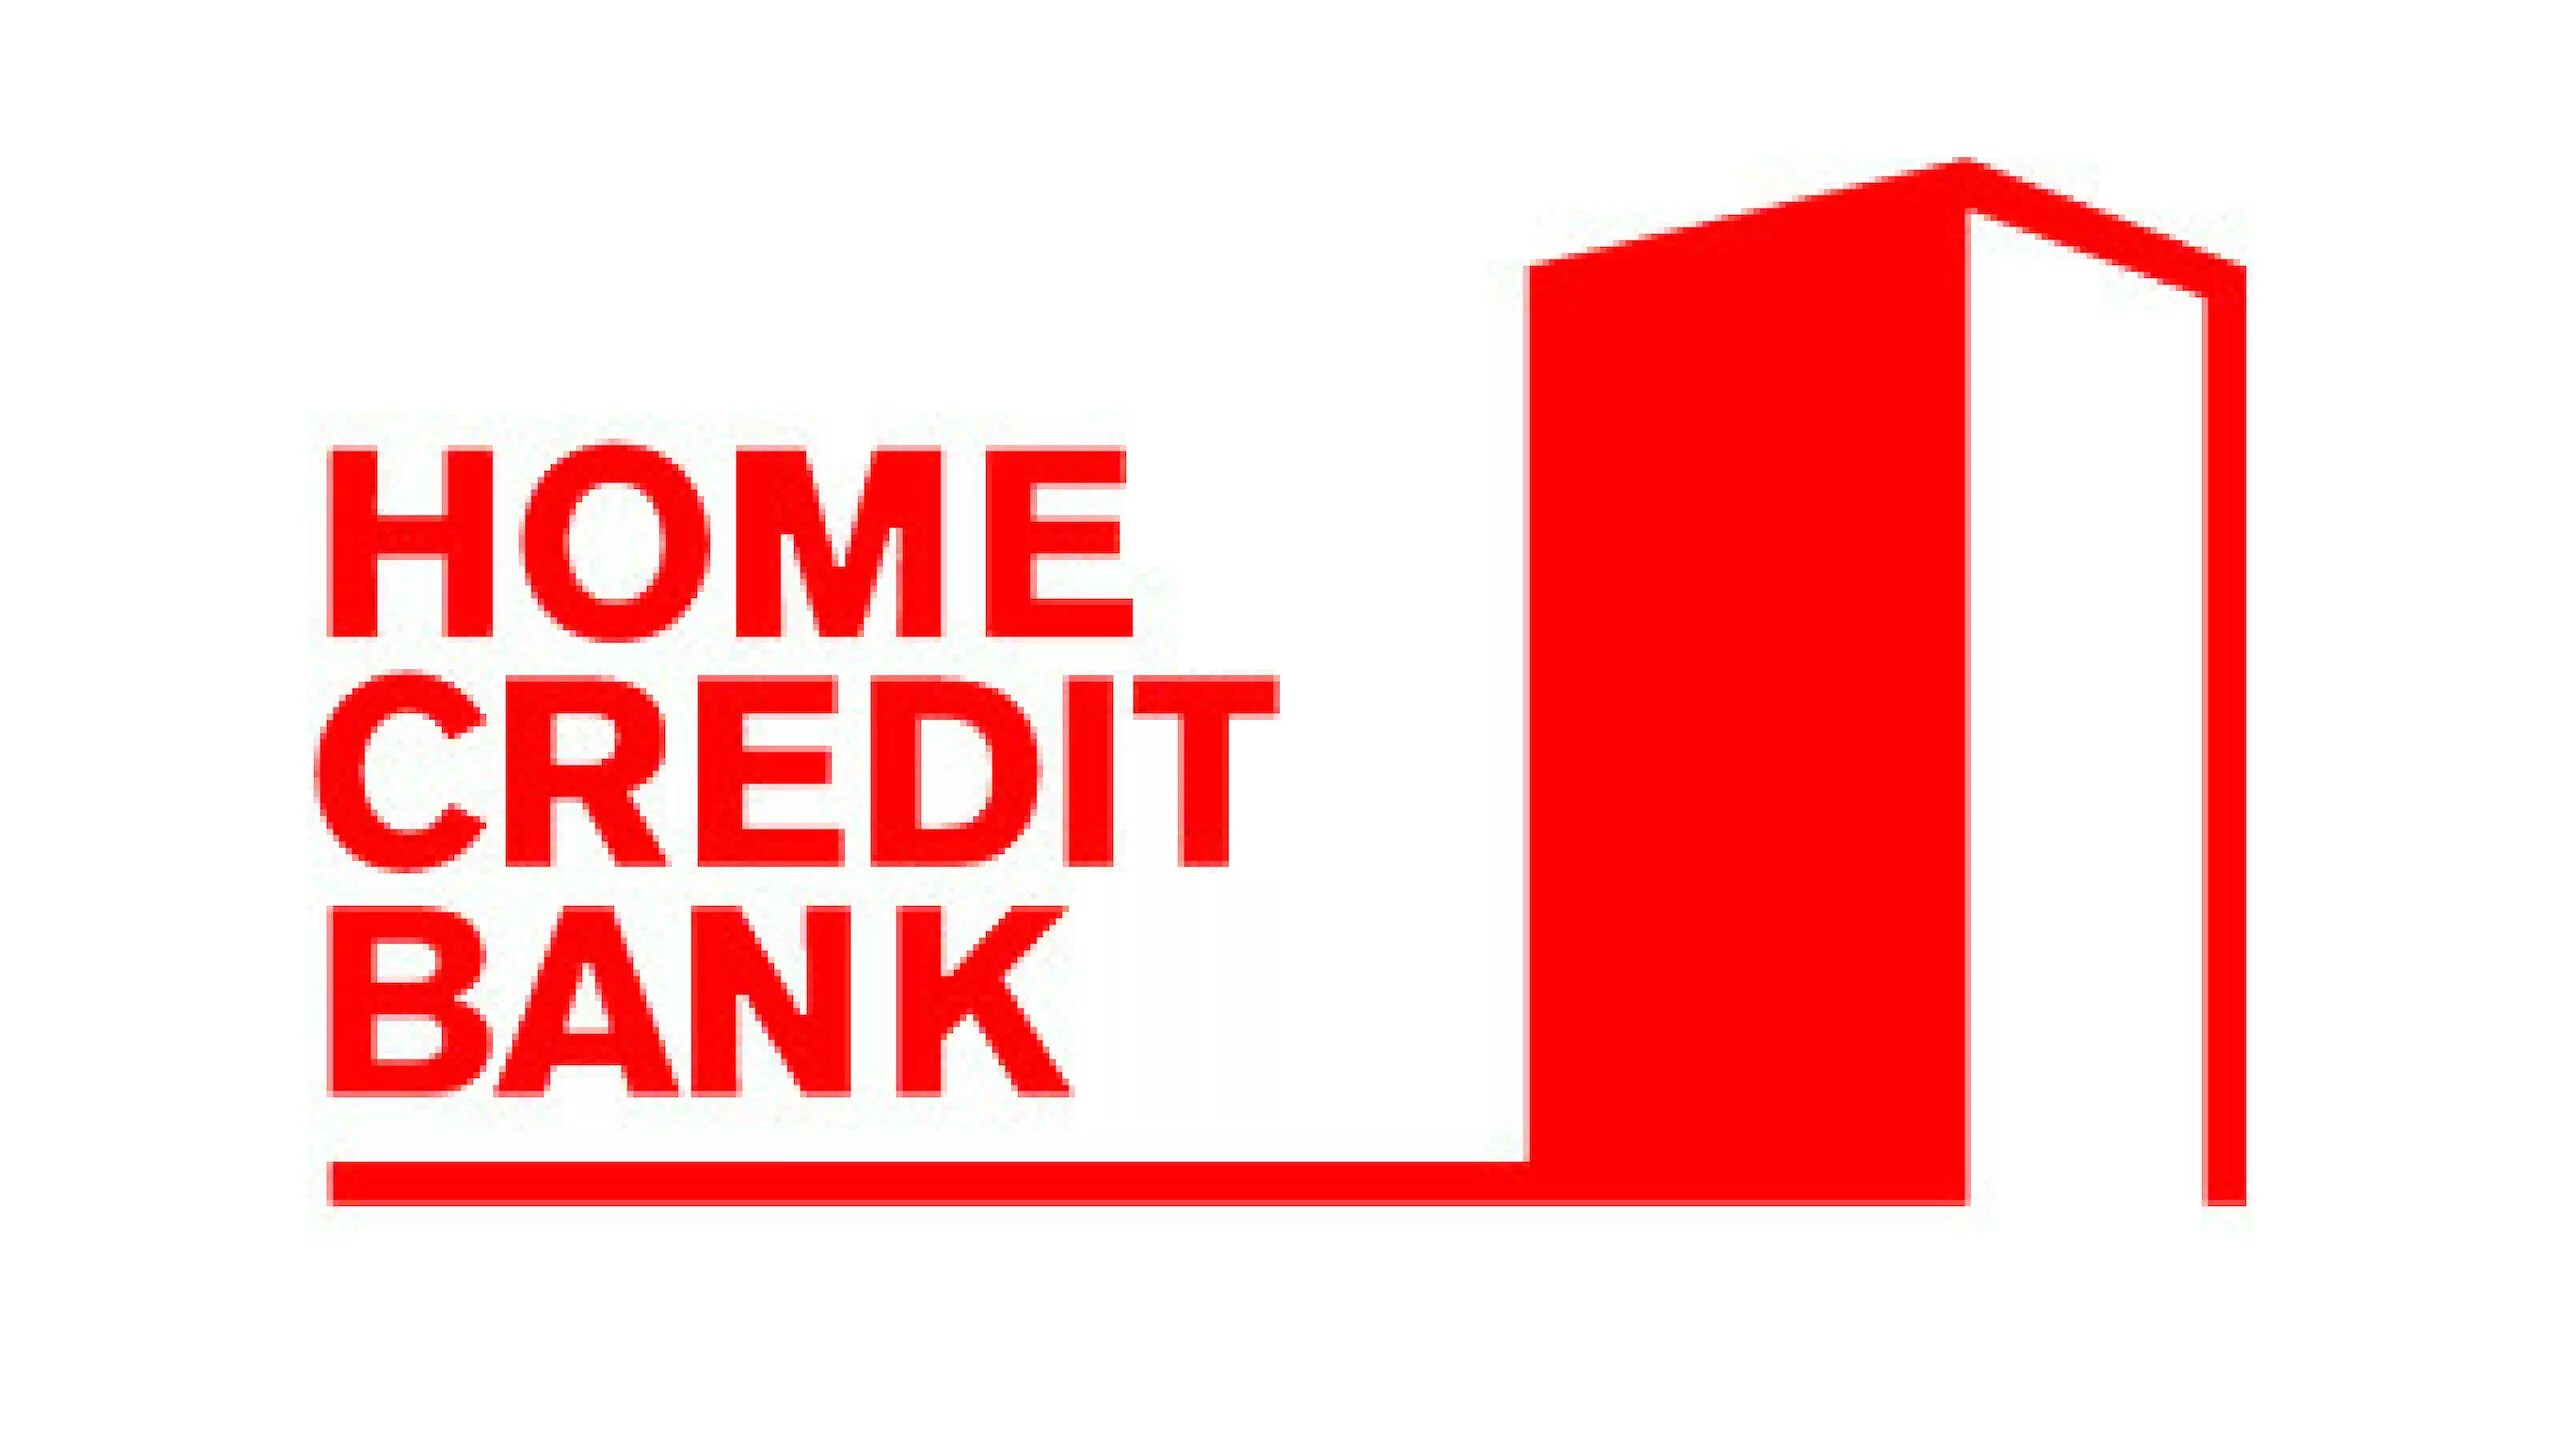 Home credit bank kazakhstan блоггер. Банк Home credit. Хоум кредит логотип. Логотип Home credit банка. Home credit Bank логотип без фона.